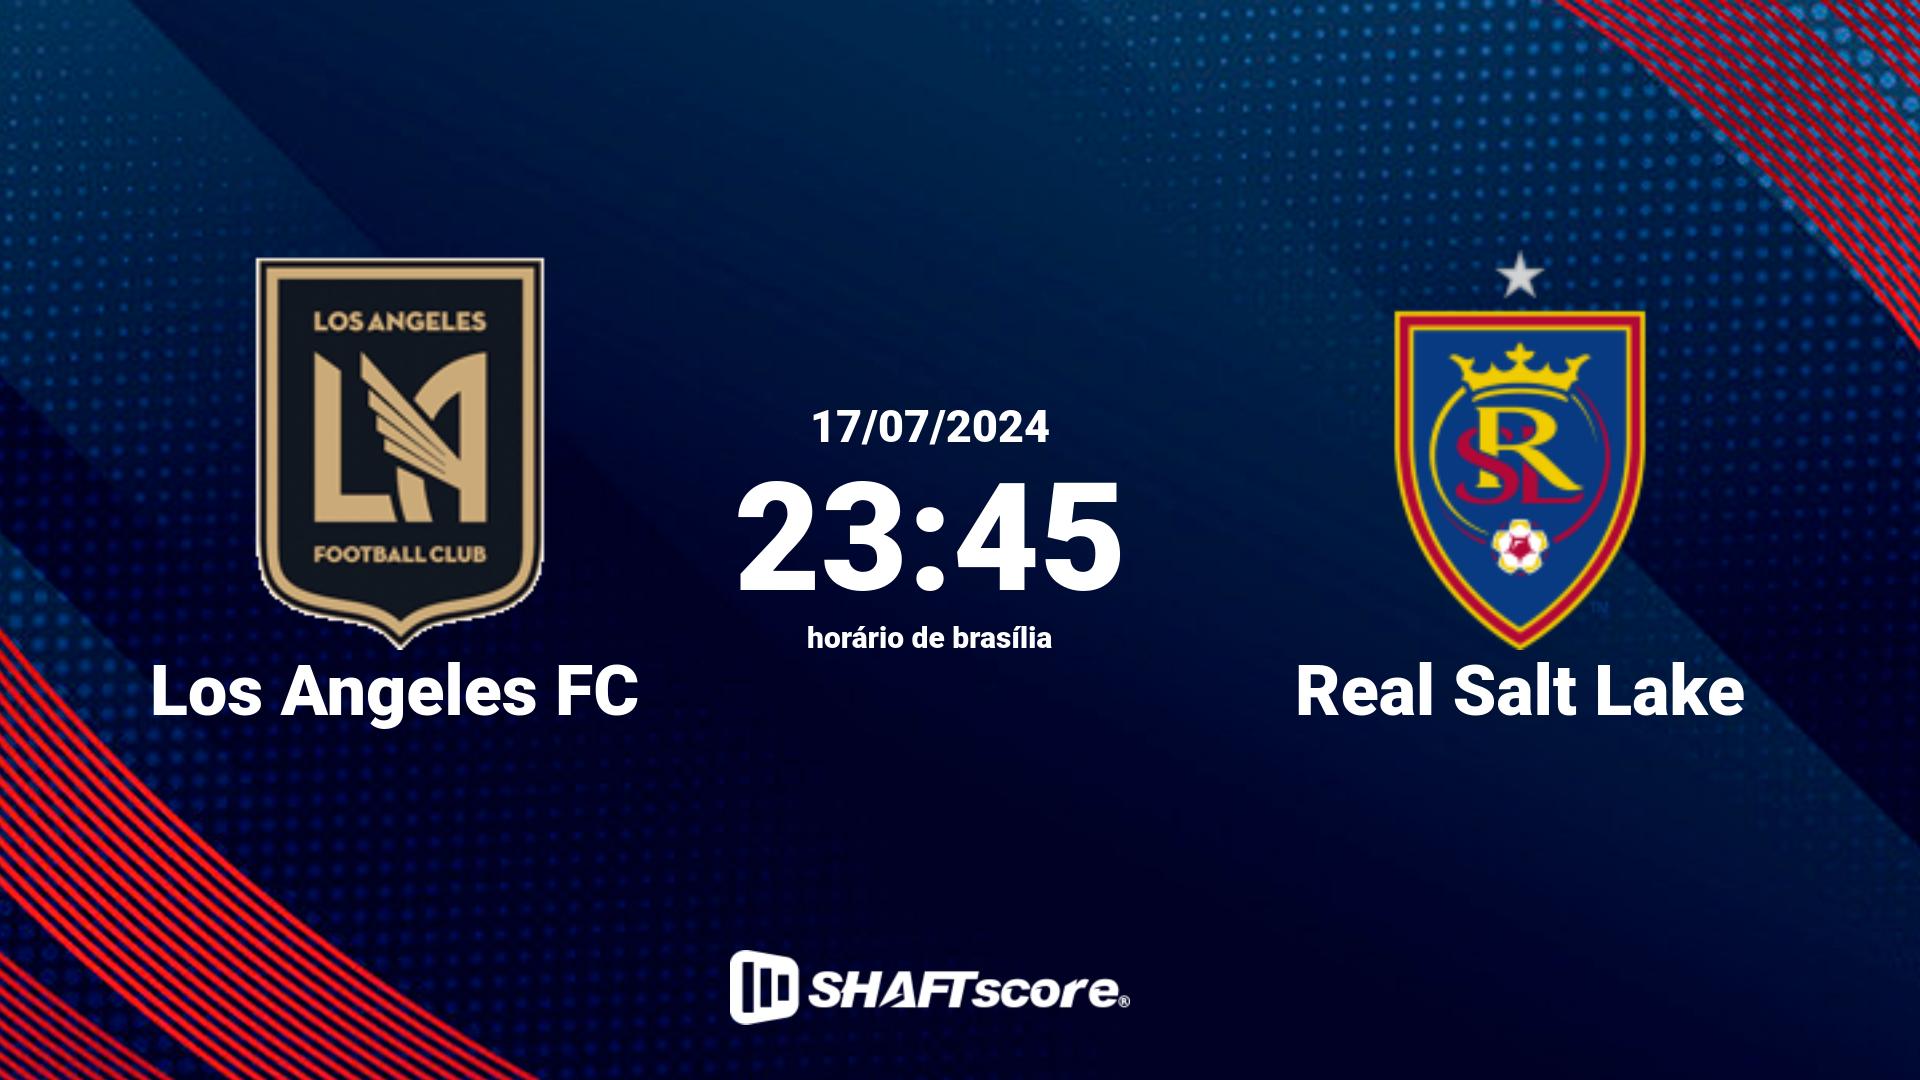 Estatísticas do jogo Los Angeles FC vs Real Salt Lake 17.07 23:45